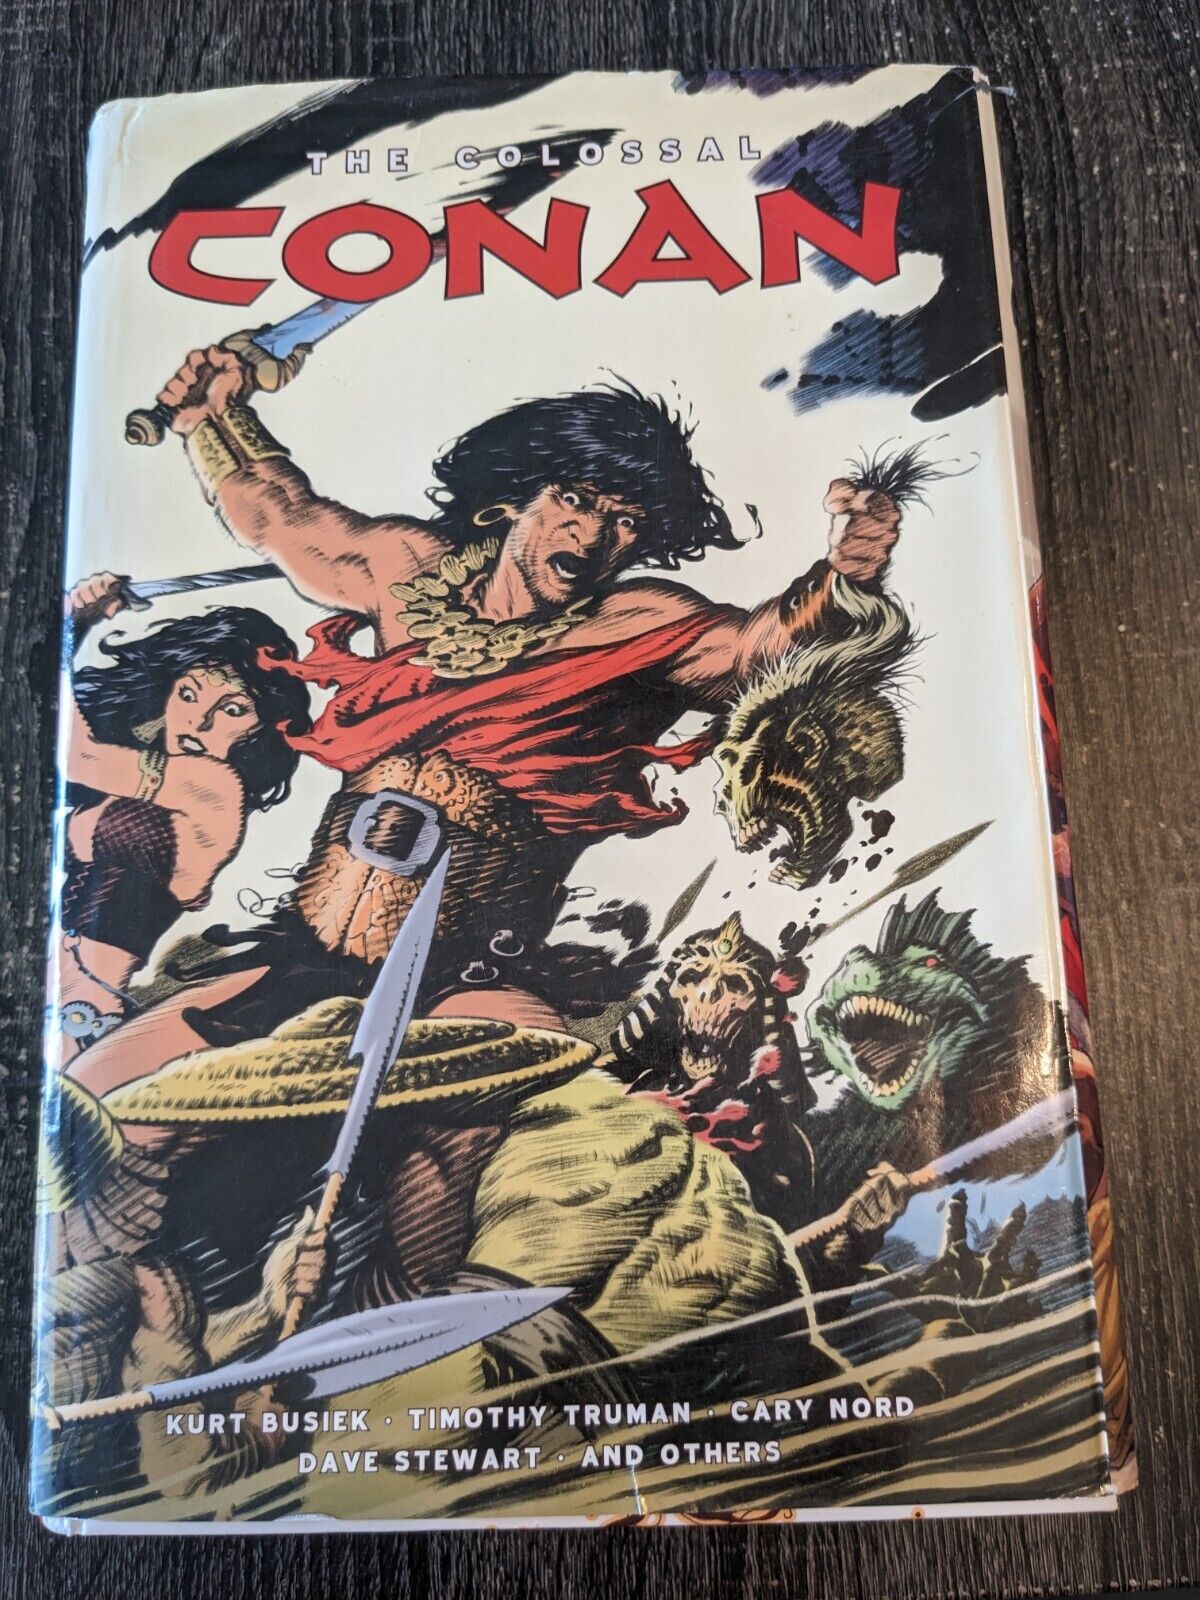 The Colossal Conan